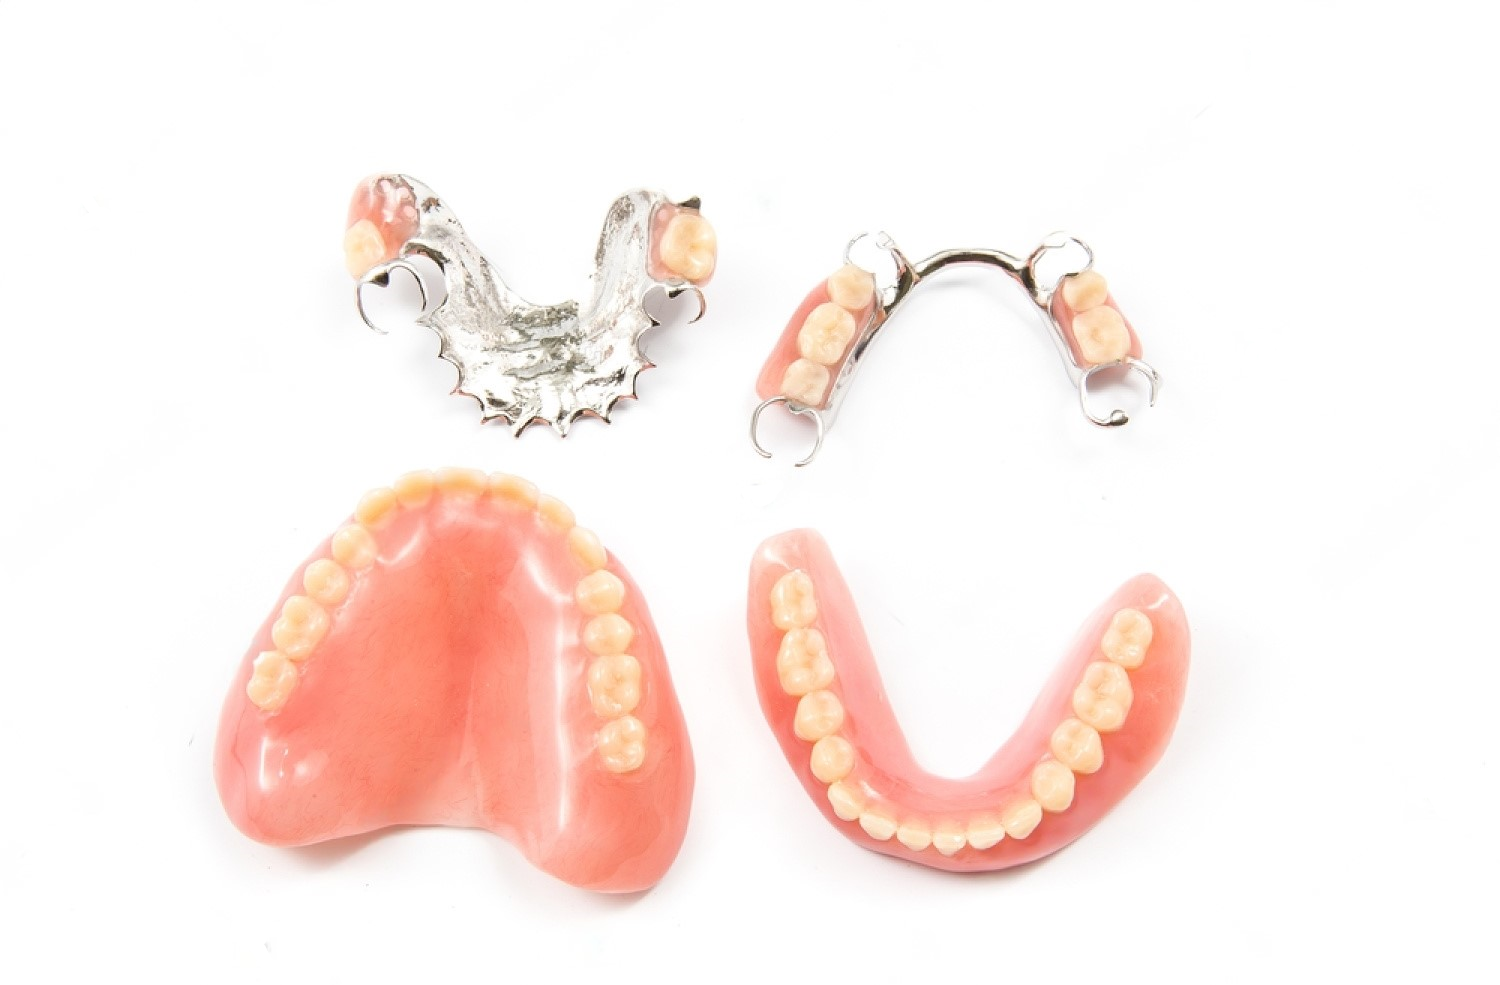 Left Image - 1-Dentures